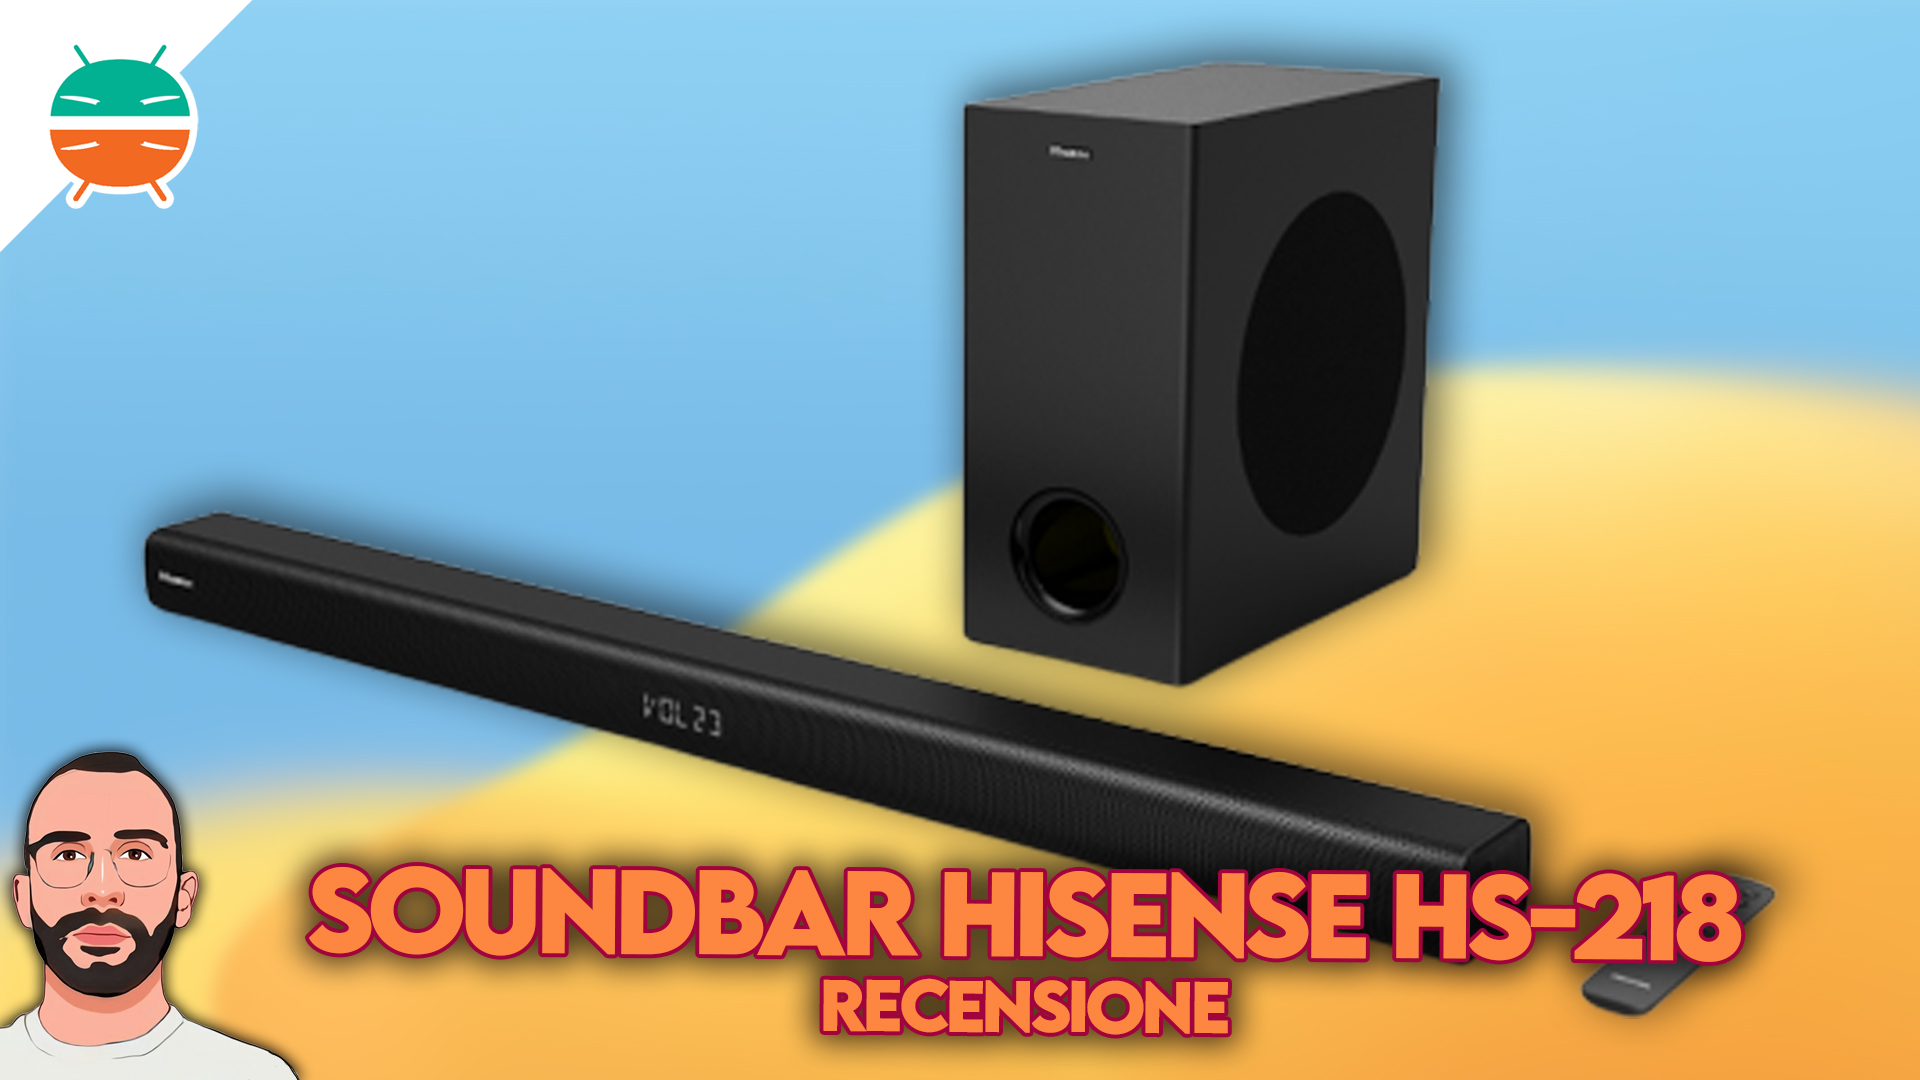 Hisense Barra de Sonido  HS218 - 3,200 pesos 